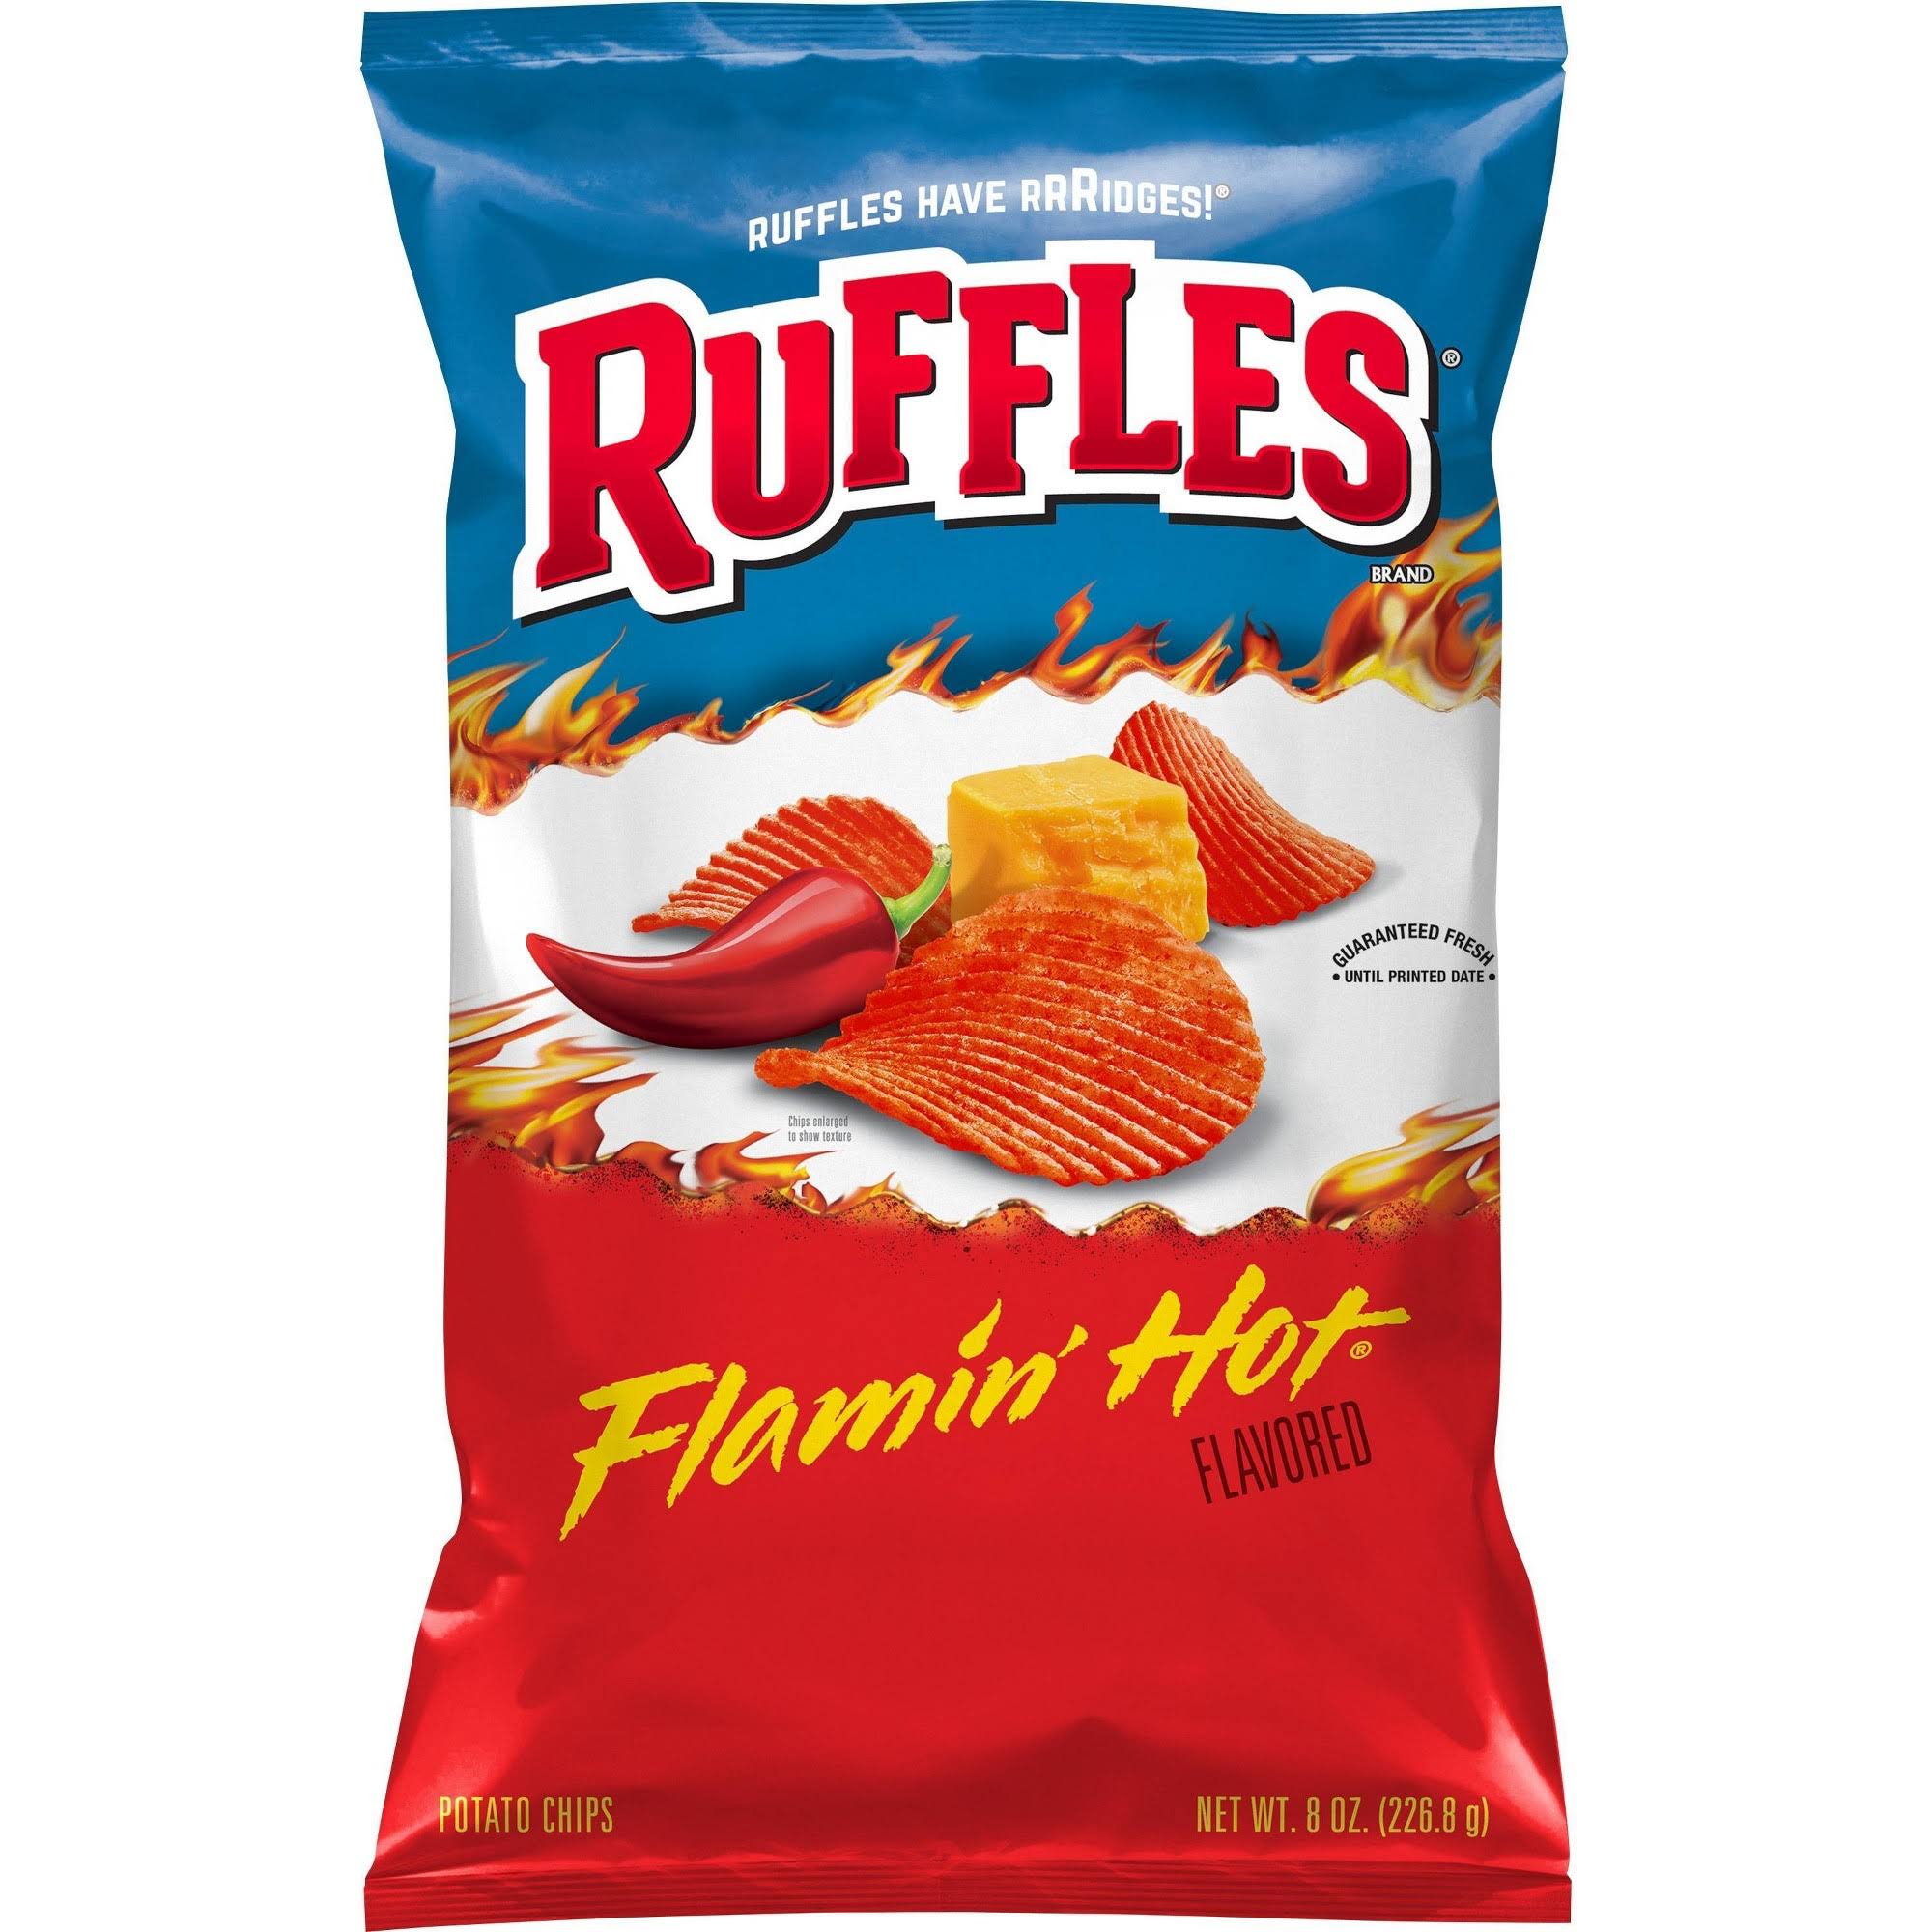 Ruffles Potato Chips, Flamin' Hot Flavored - 8 oz